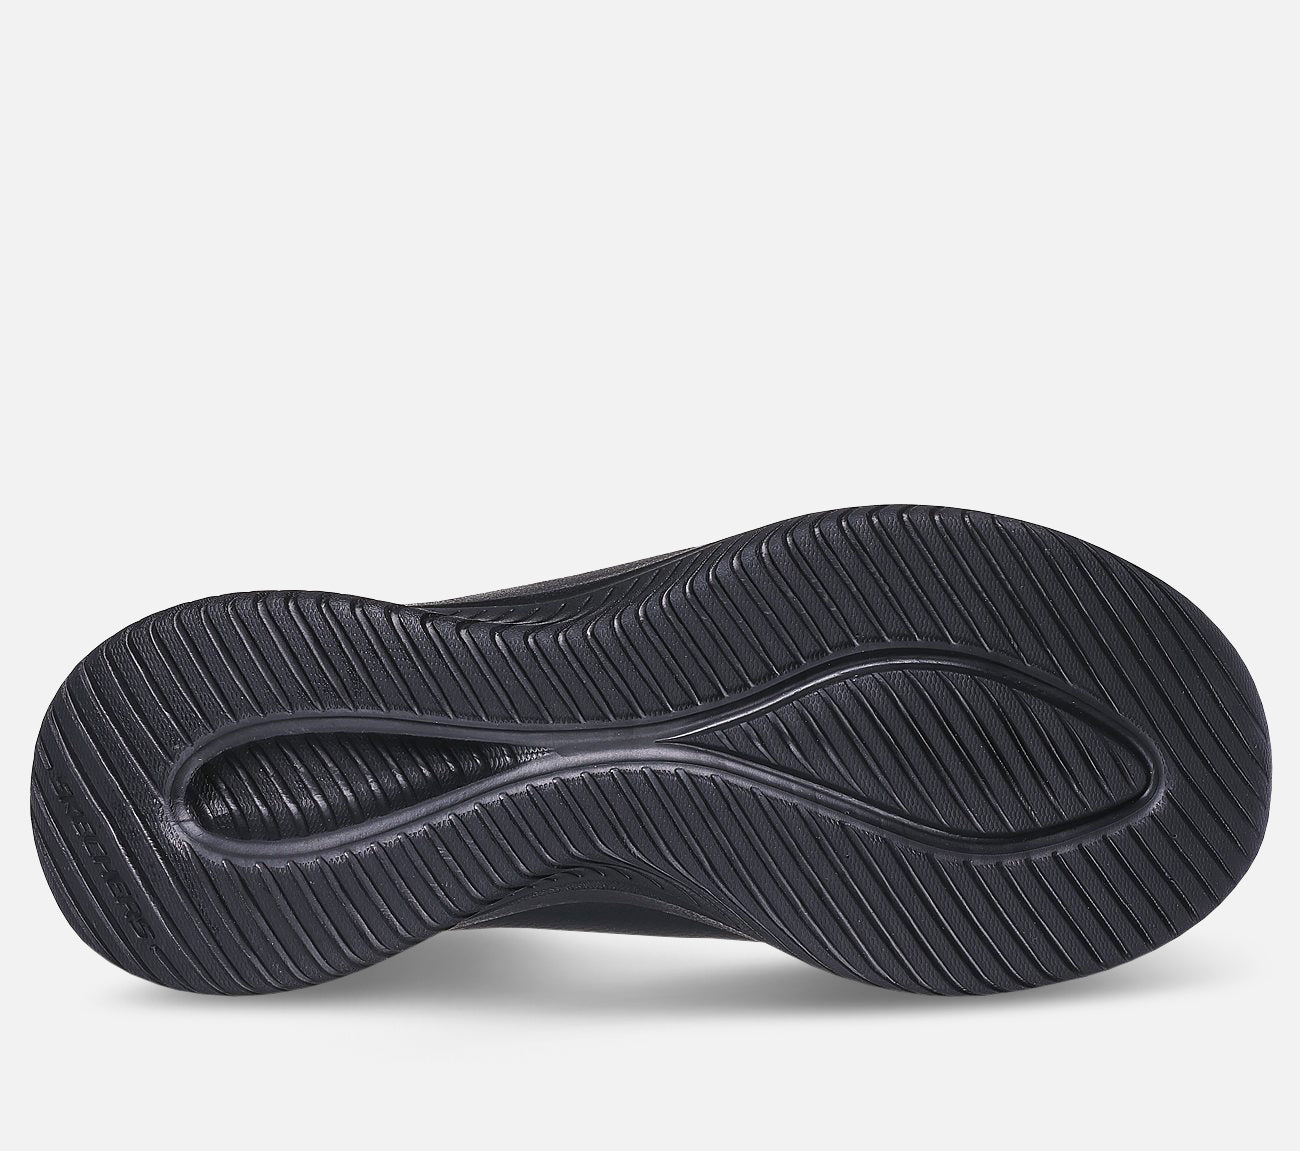 Slip-ins: Ultra Flex 3.0 - All Smooth Shoe Skechers